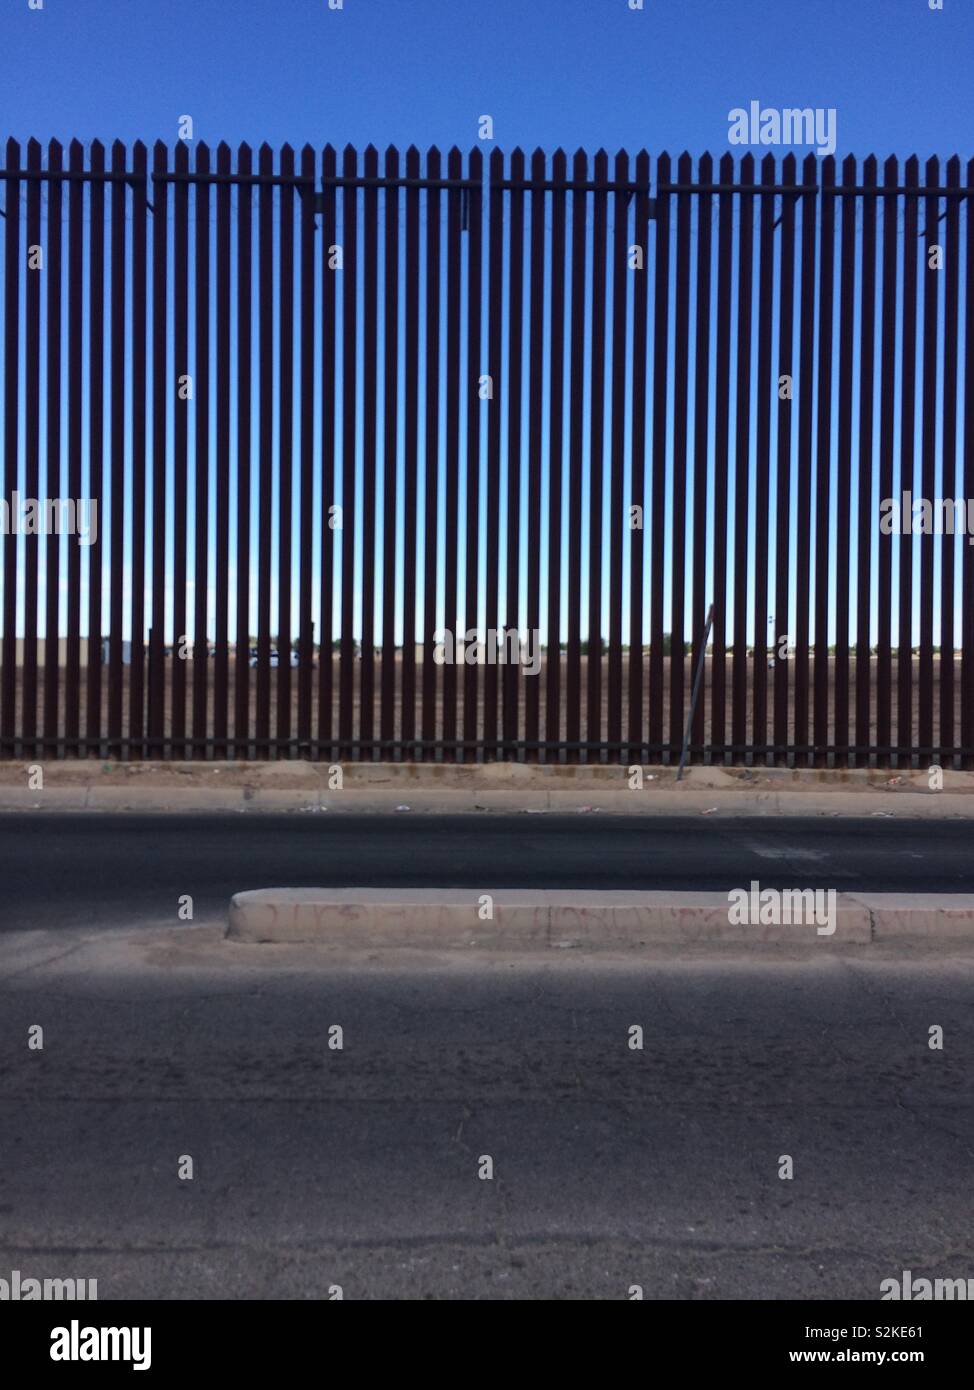 US-mexikanischen Grenze Zaun Stockfoto